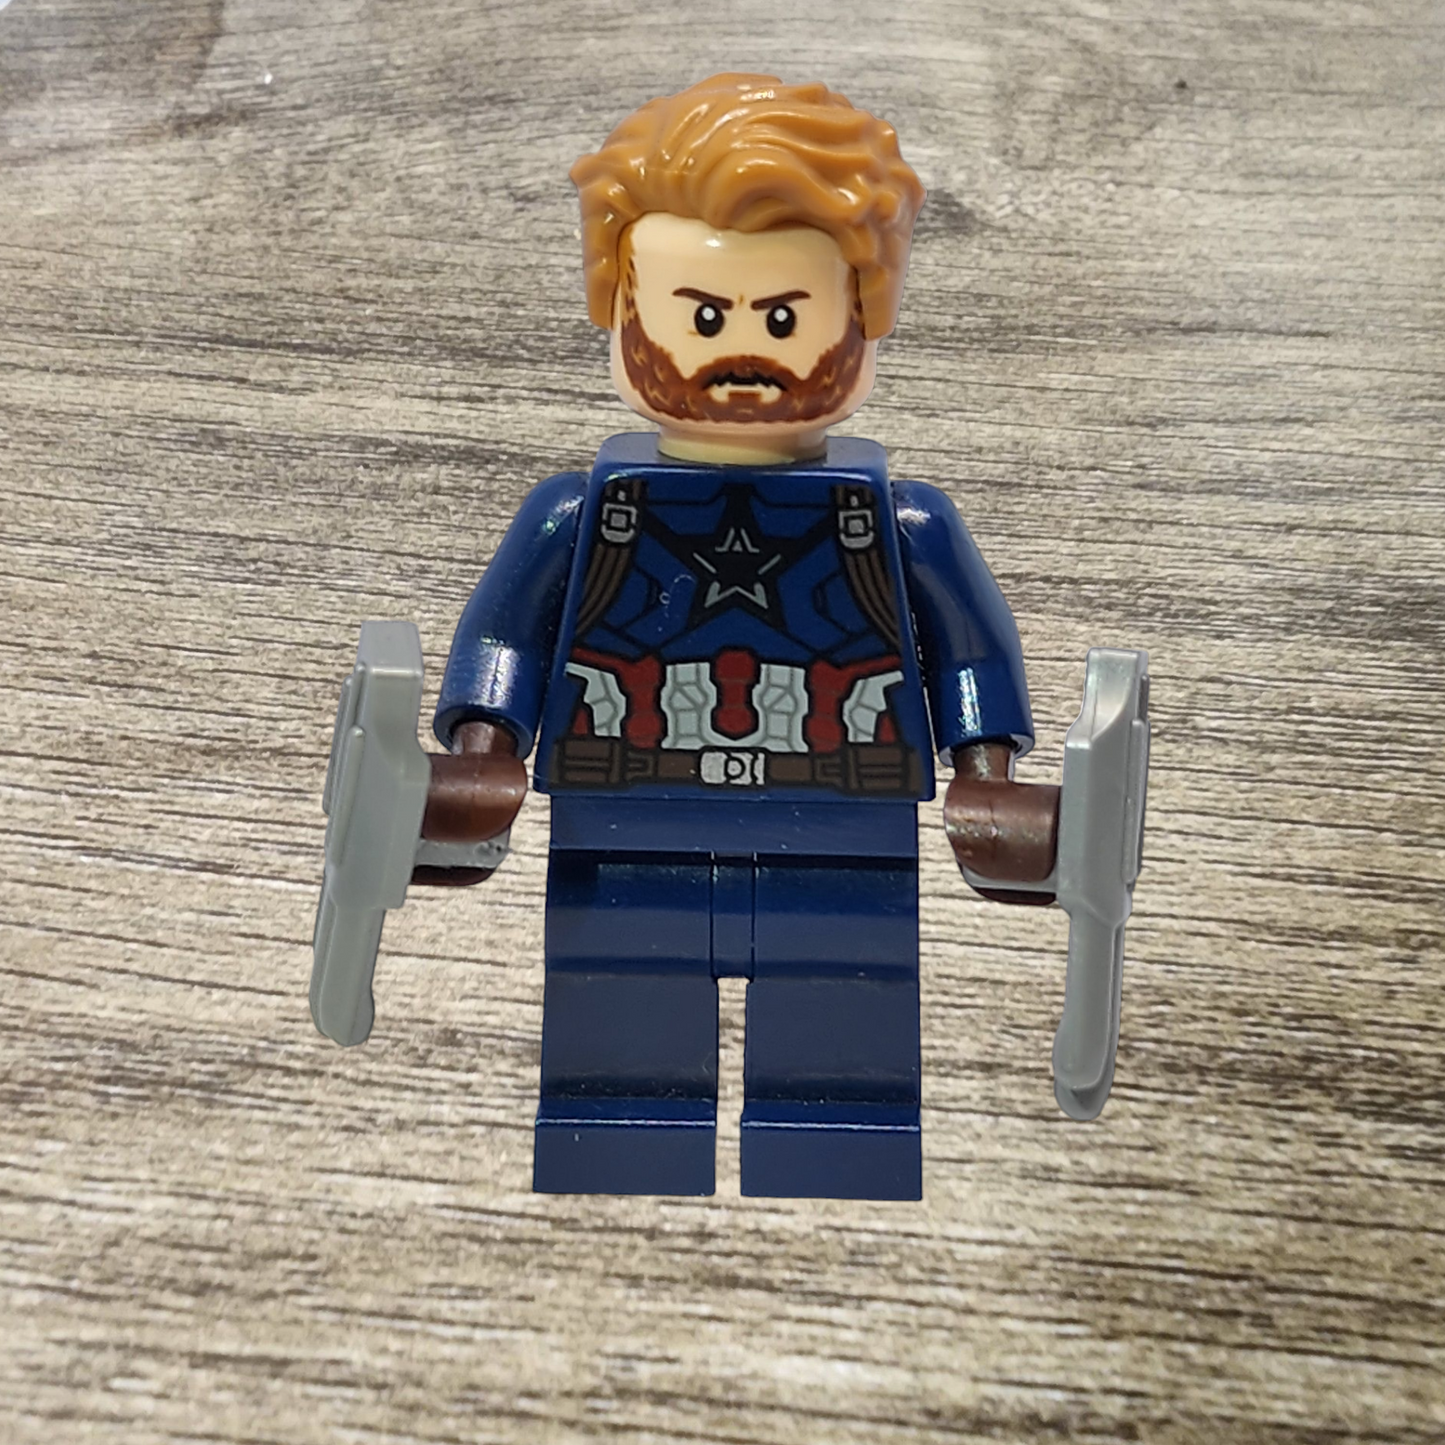 Lego Captain America Minifigure sh495 Marvel 76101